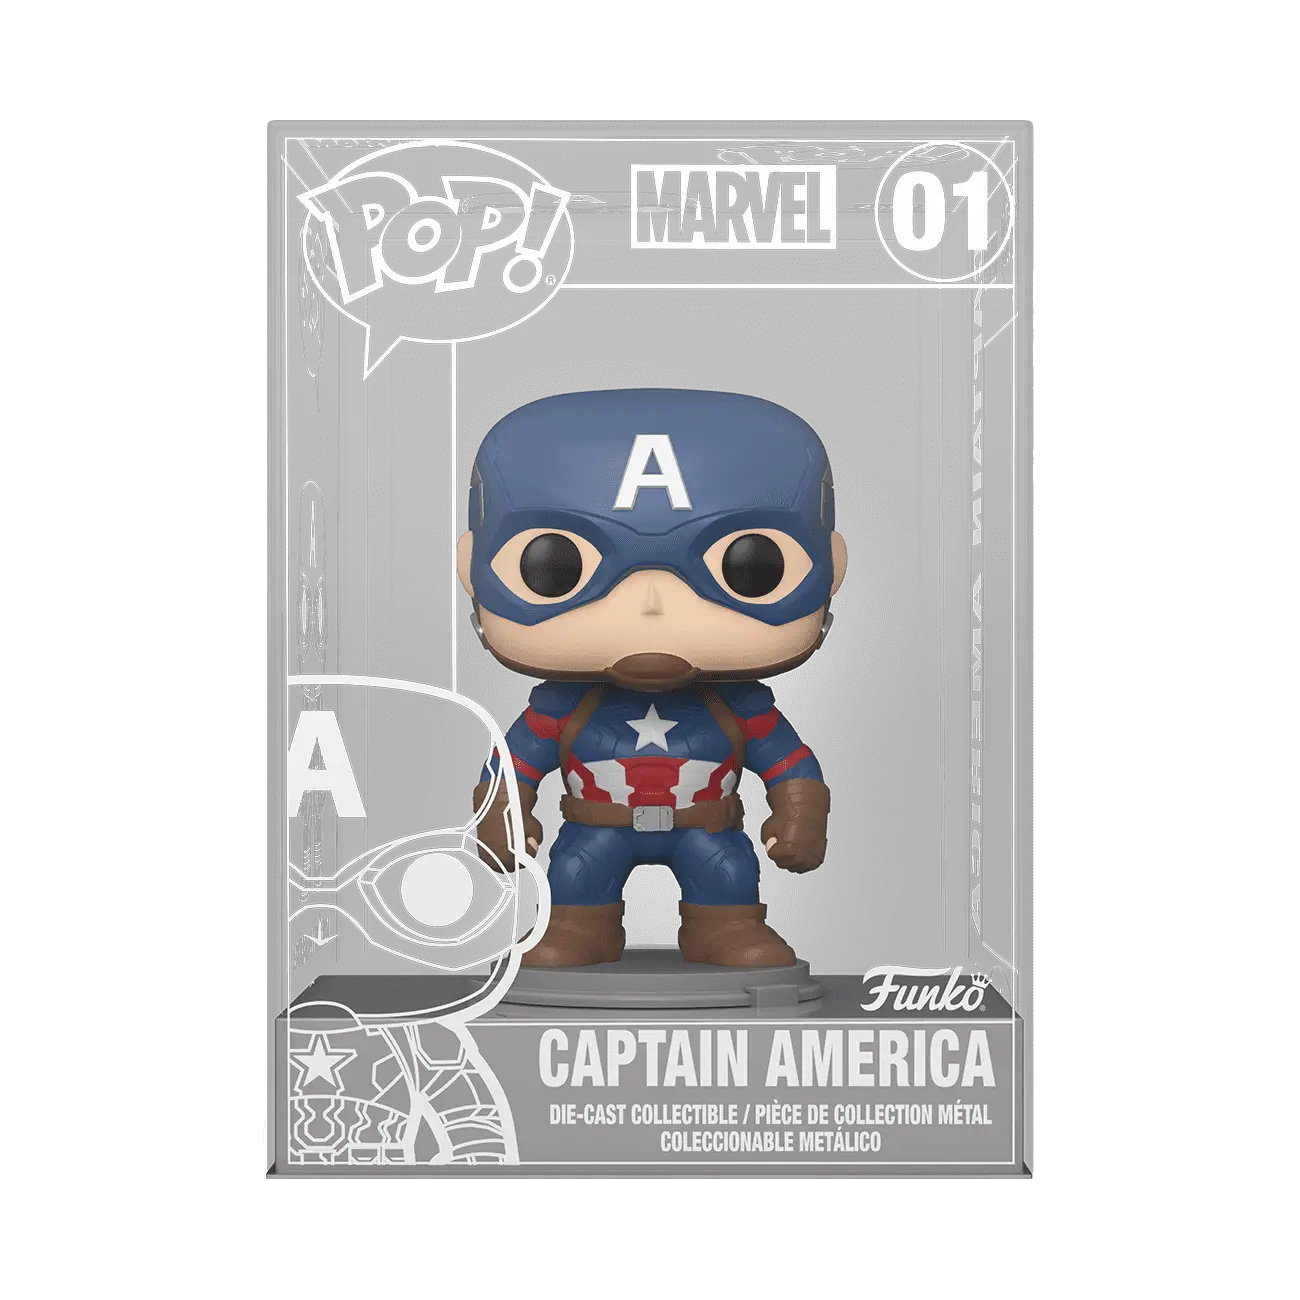 Die-cast Captain America - FunKon 2021